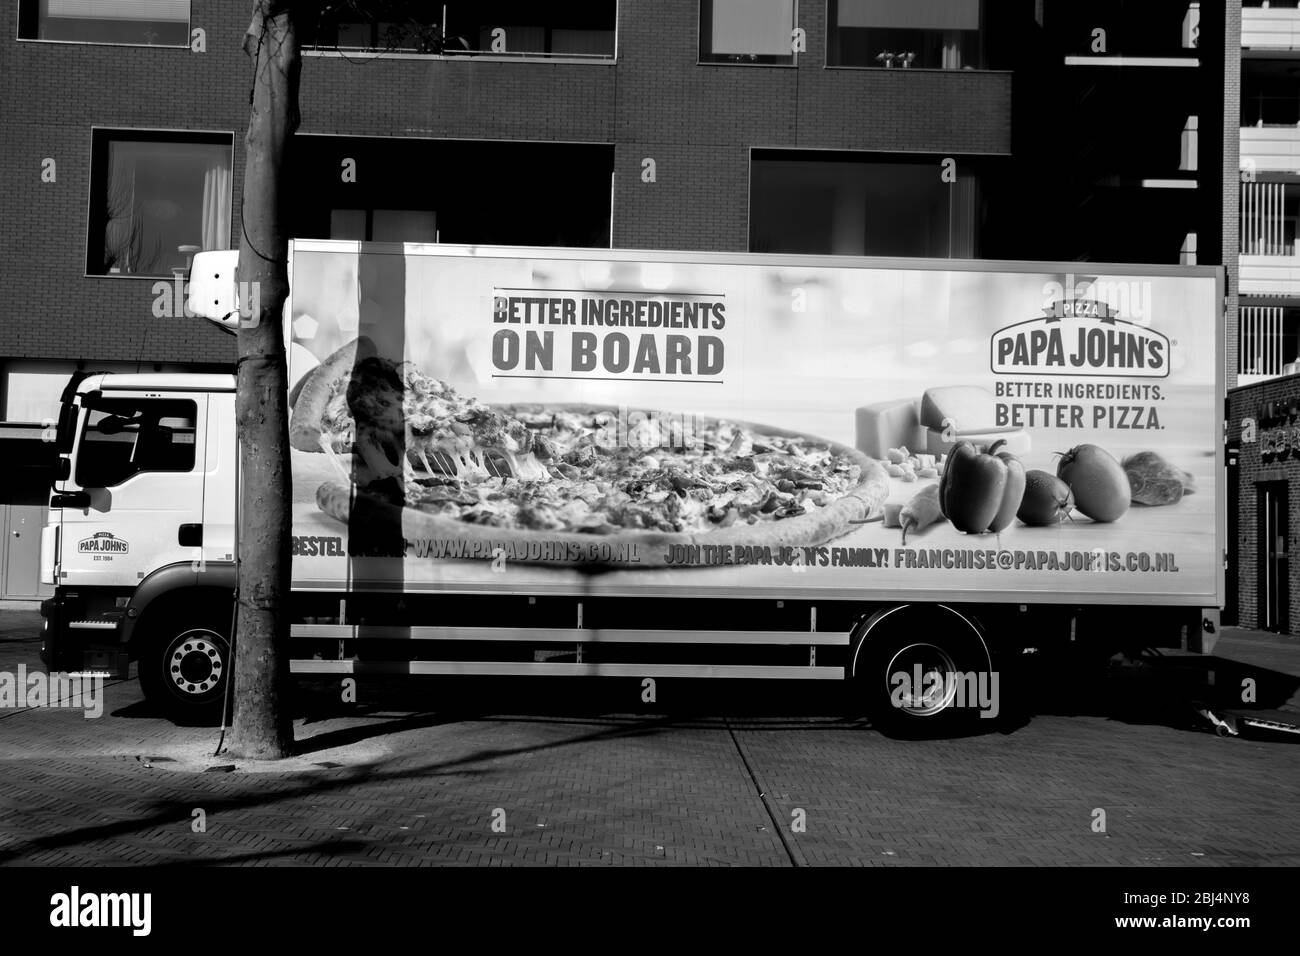 Papa John's Company Truck At Amsterdam The Netherlands 2020 Stock Photo